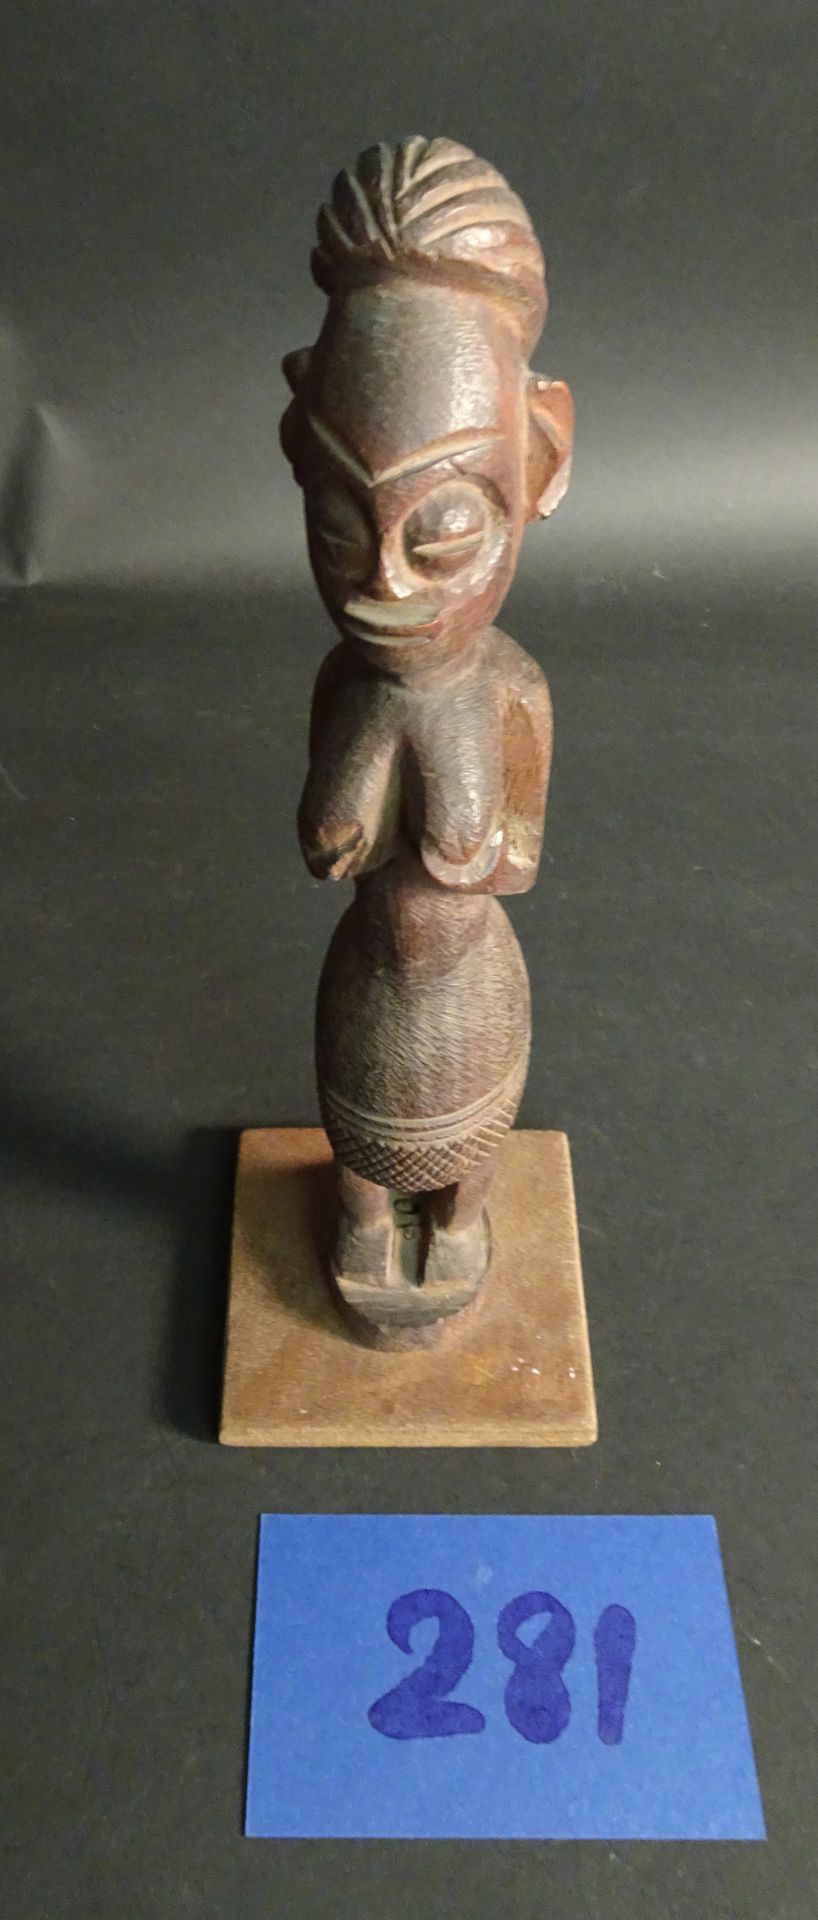 Null Sculpture Burkina Faso, bois, ancien.

Diamètre : 33 cm